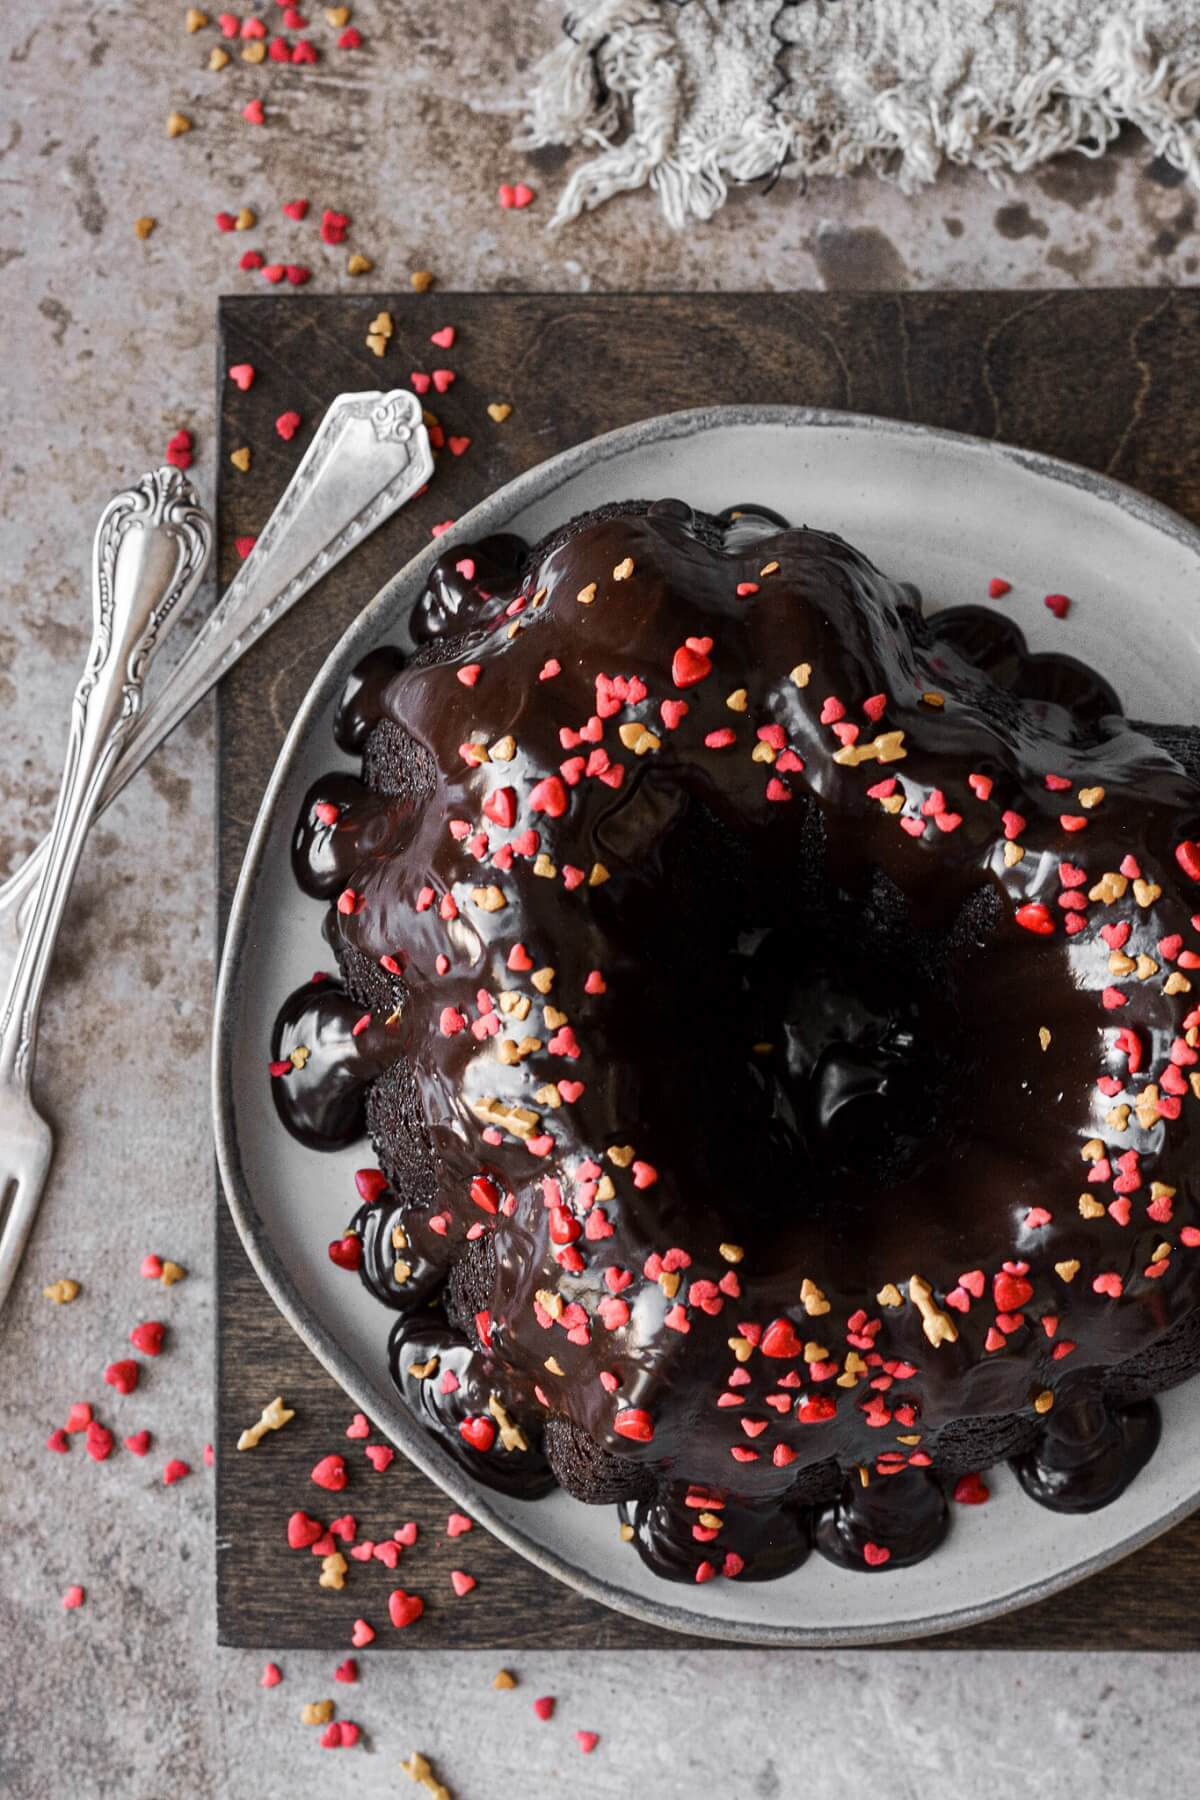 Chocolate ganache and sprinkles on a heart shaped mini chocolate bundt cake.